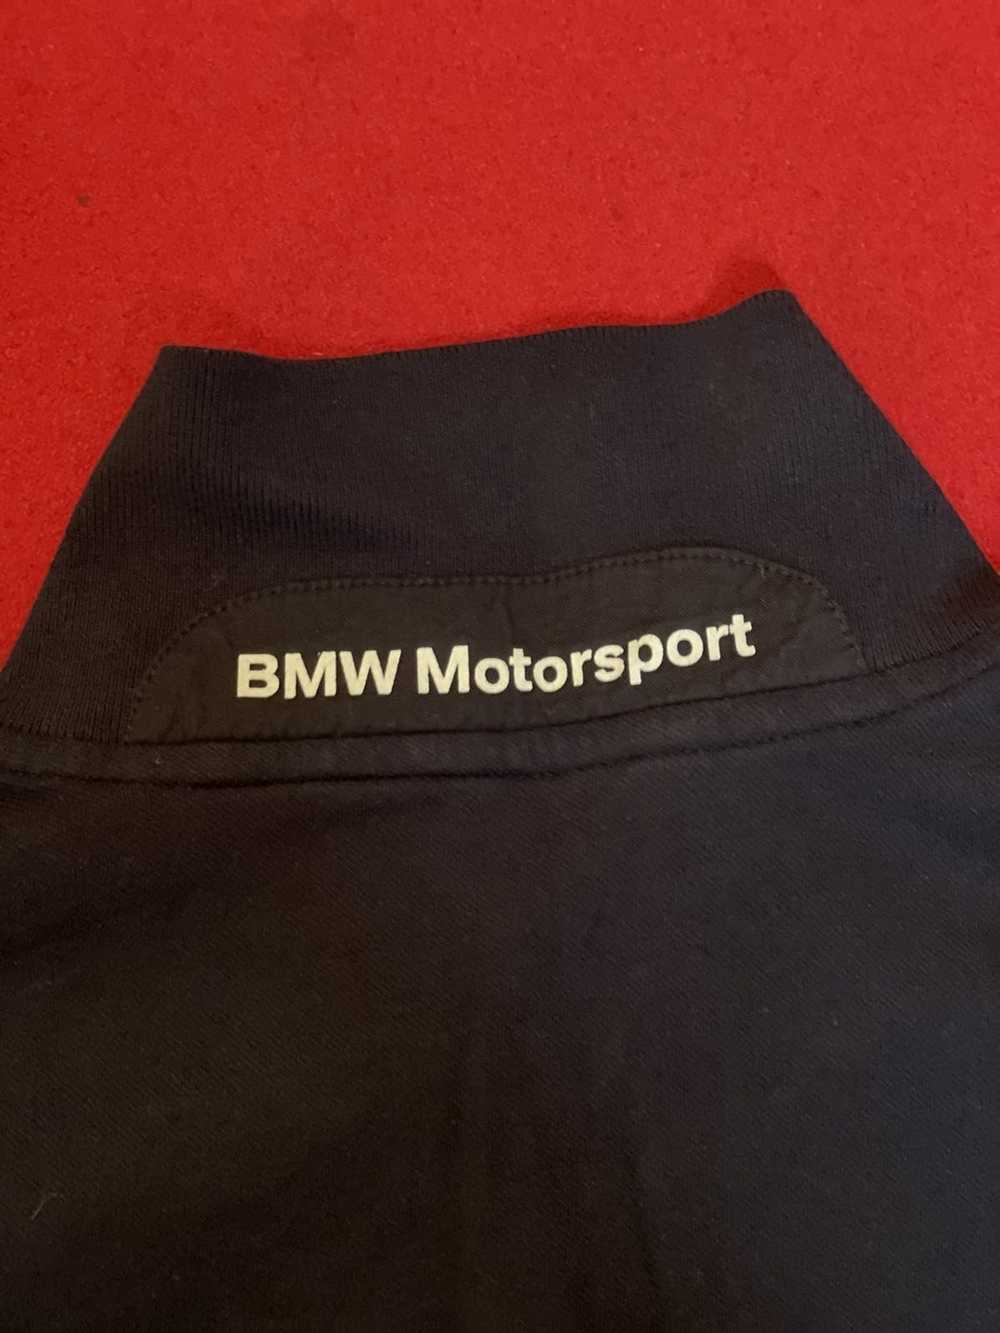 Bmw BMW Motorsport Polo Shirt - image 6